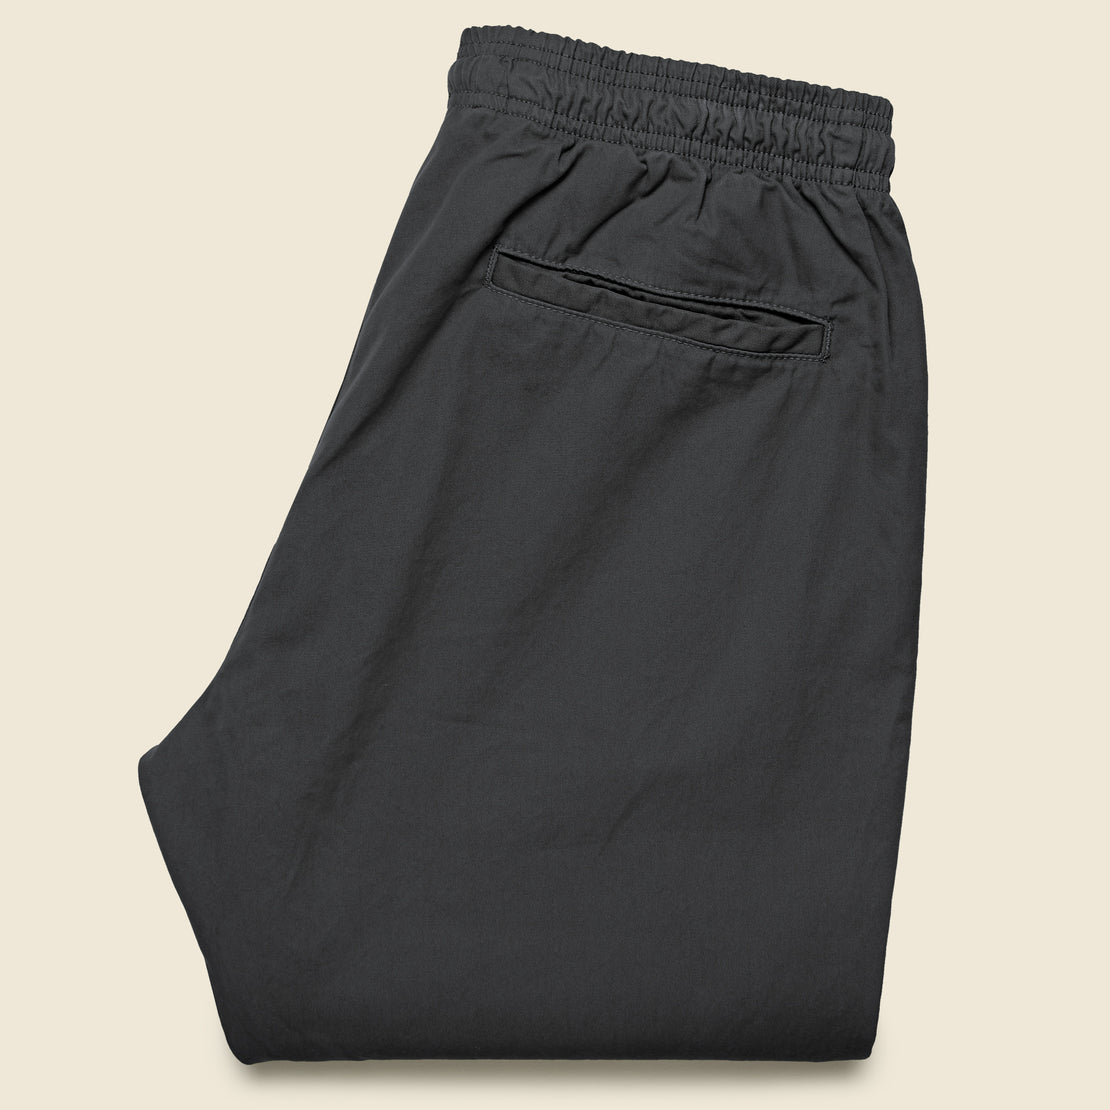 Twill Easy Chino - Black - Save Khaki - STAG Provisions - Pants - Lounge